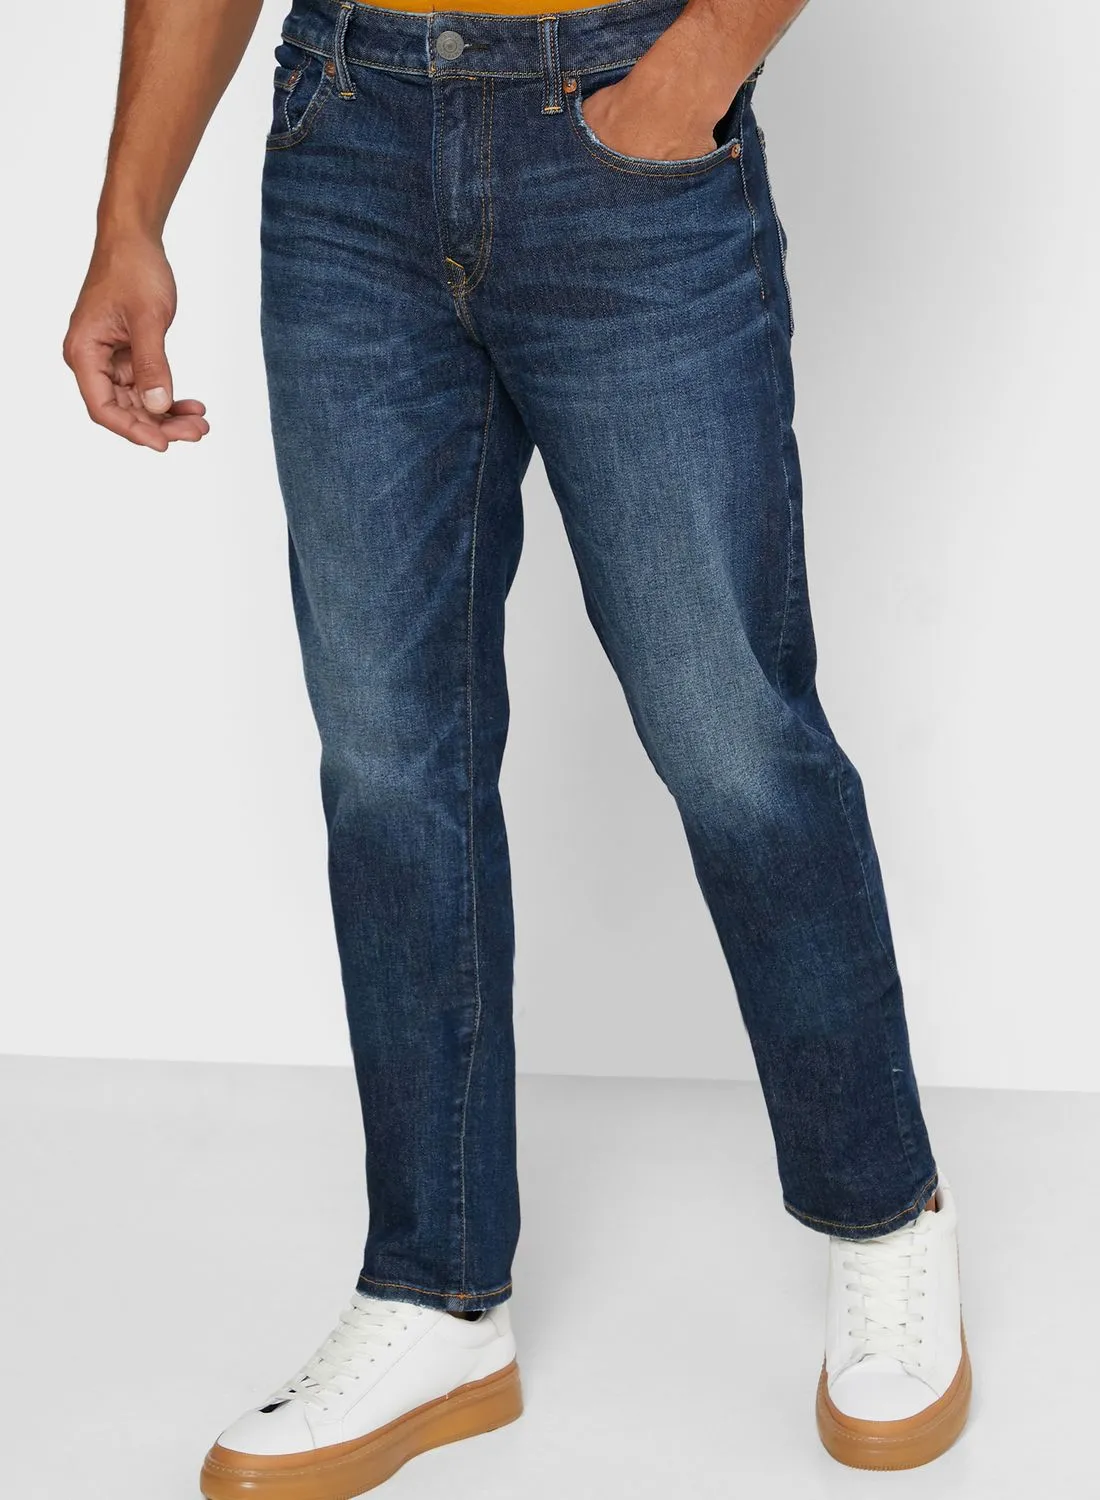 American Eagle Dark Wash Slim Straight Fit Jeans